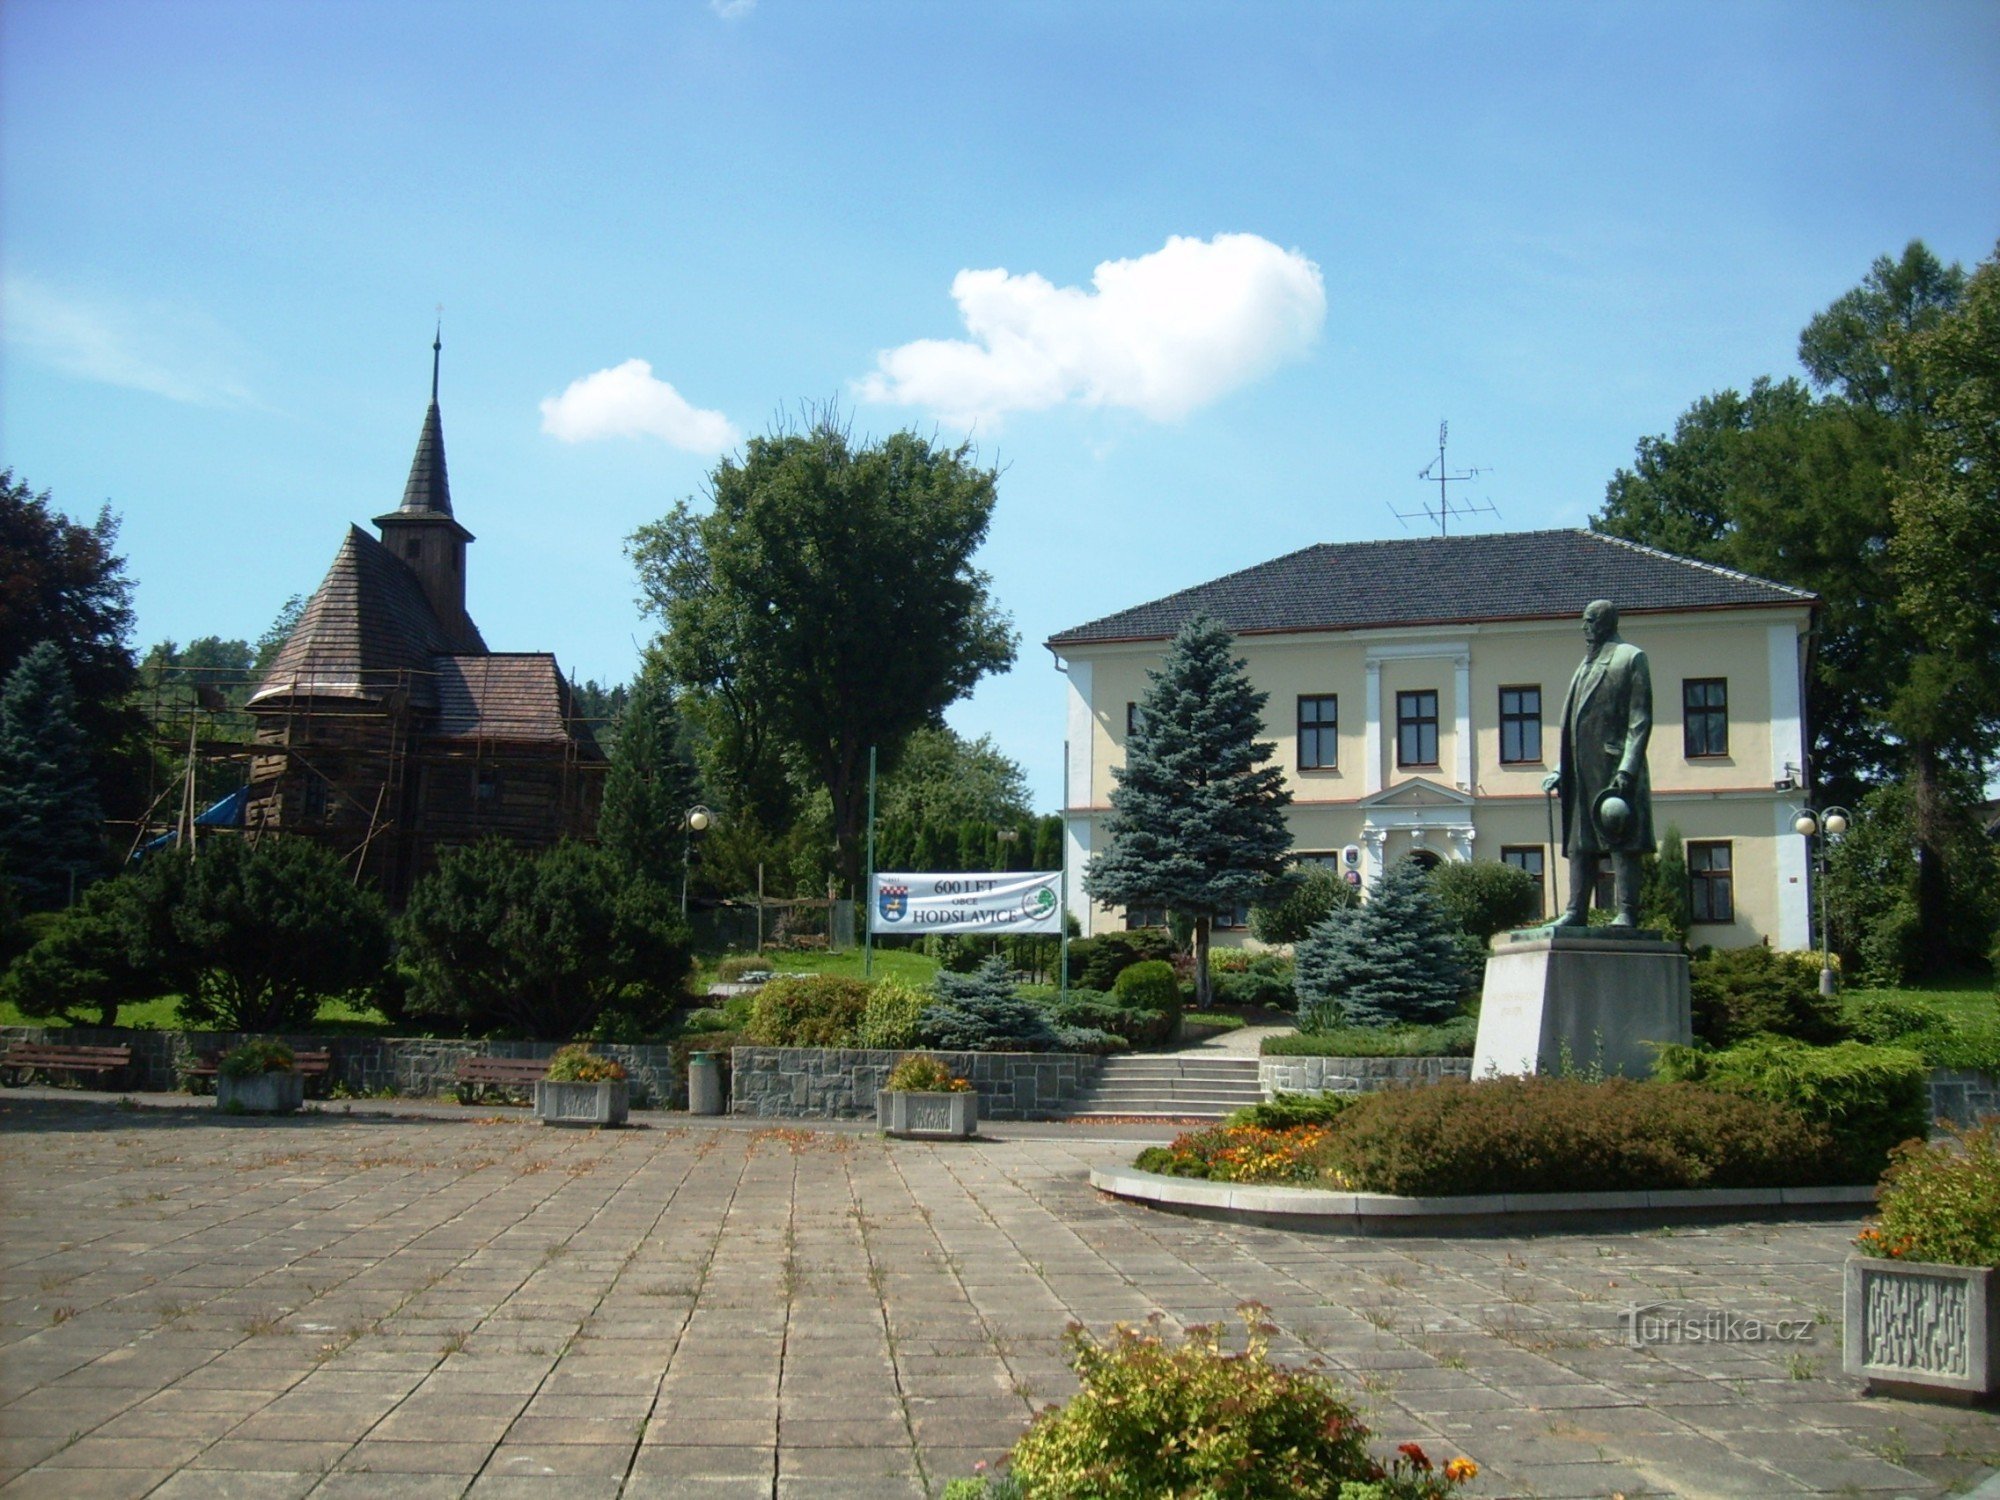 center of Hodslavice village